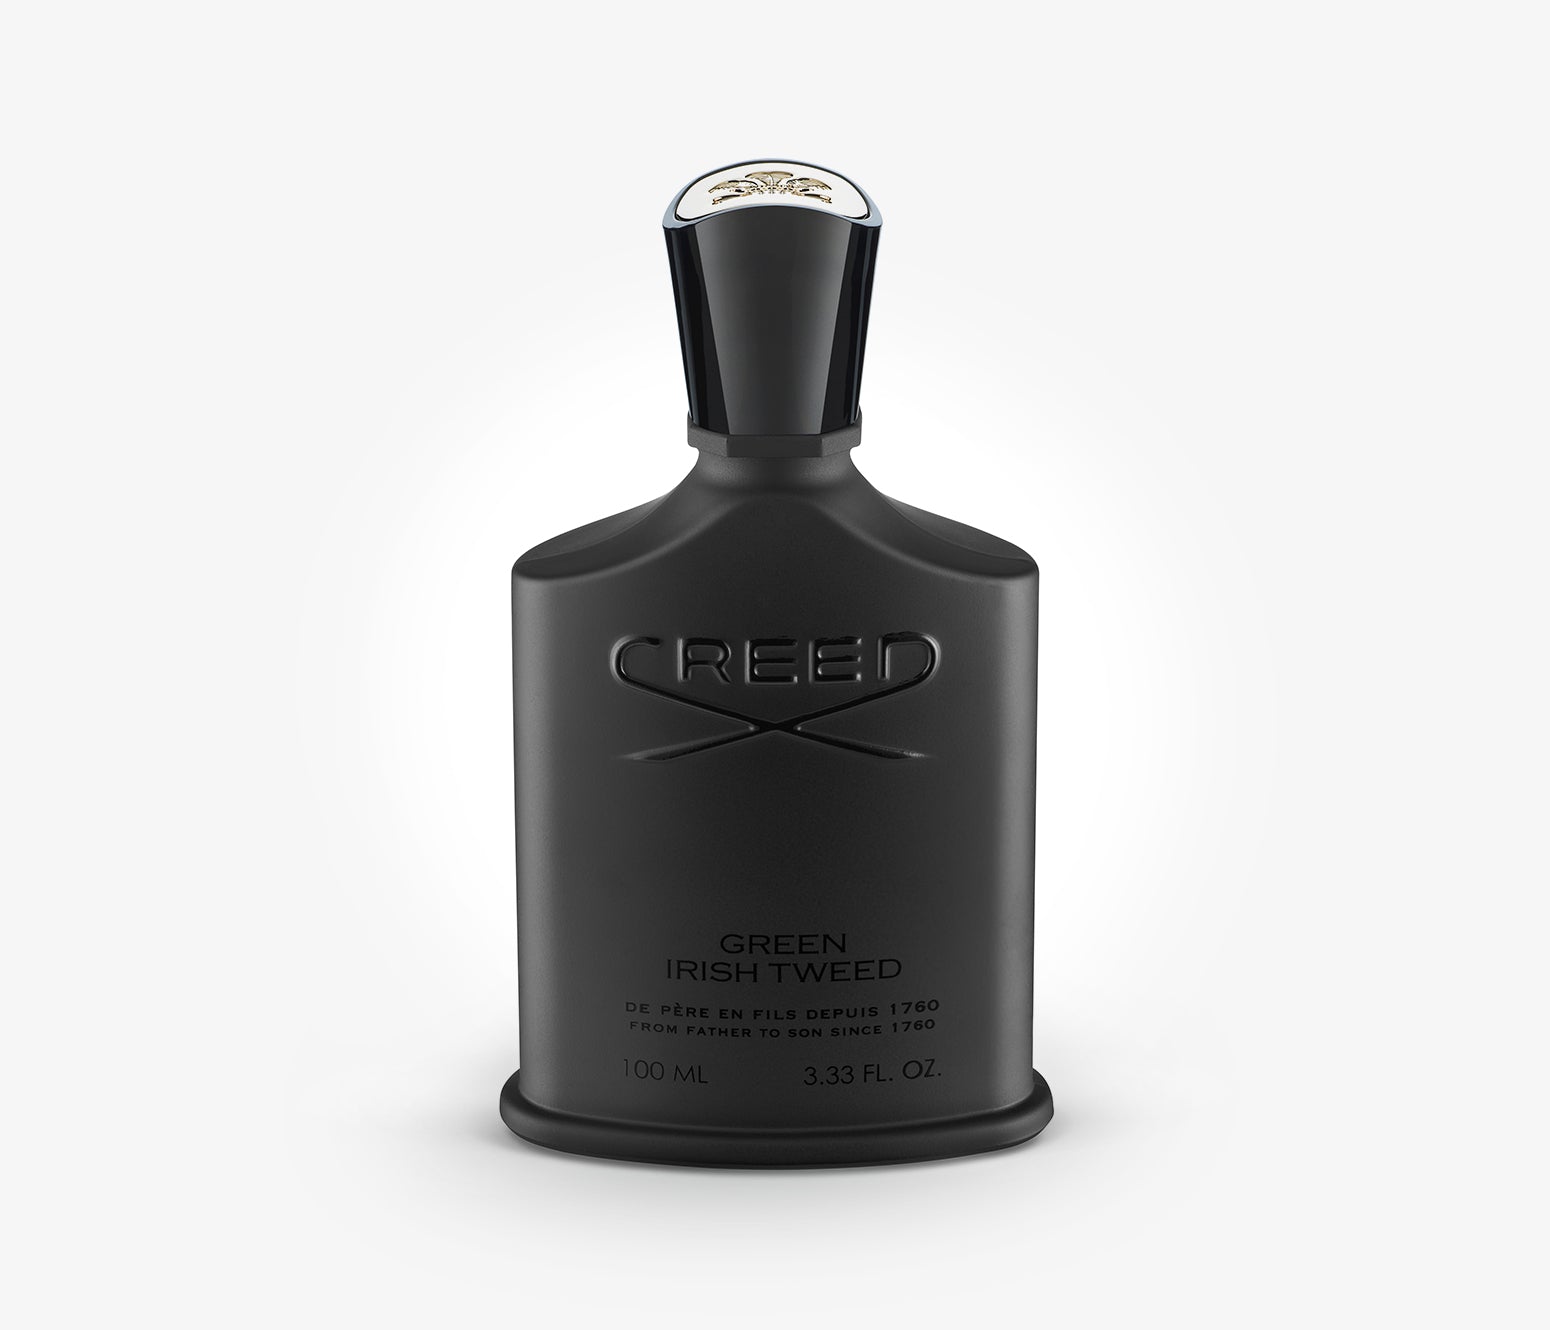 Creed  - Green Irish Tweed  - 100ml - WSD001 - Product Image - Fragrance - Les Senteurs